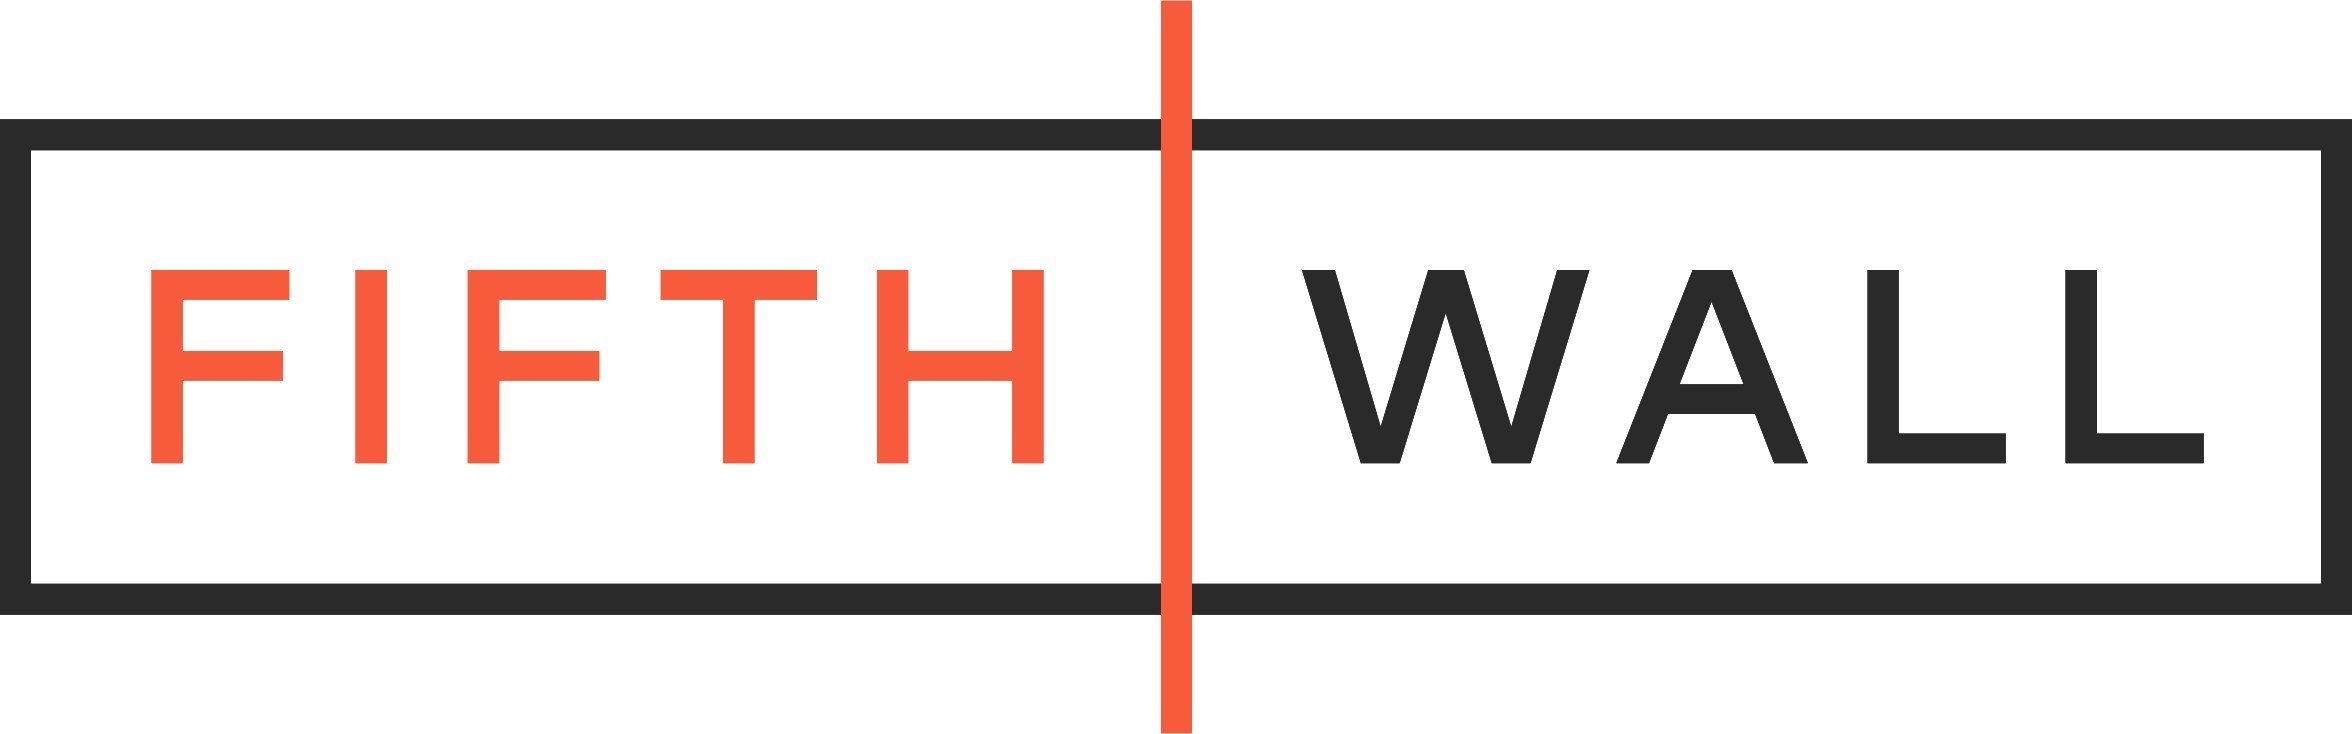 FifthWall_Logo.jpeg